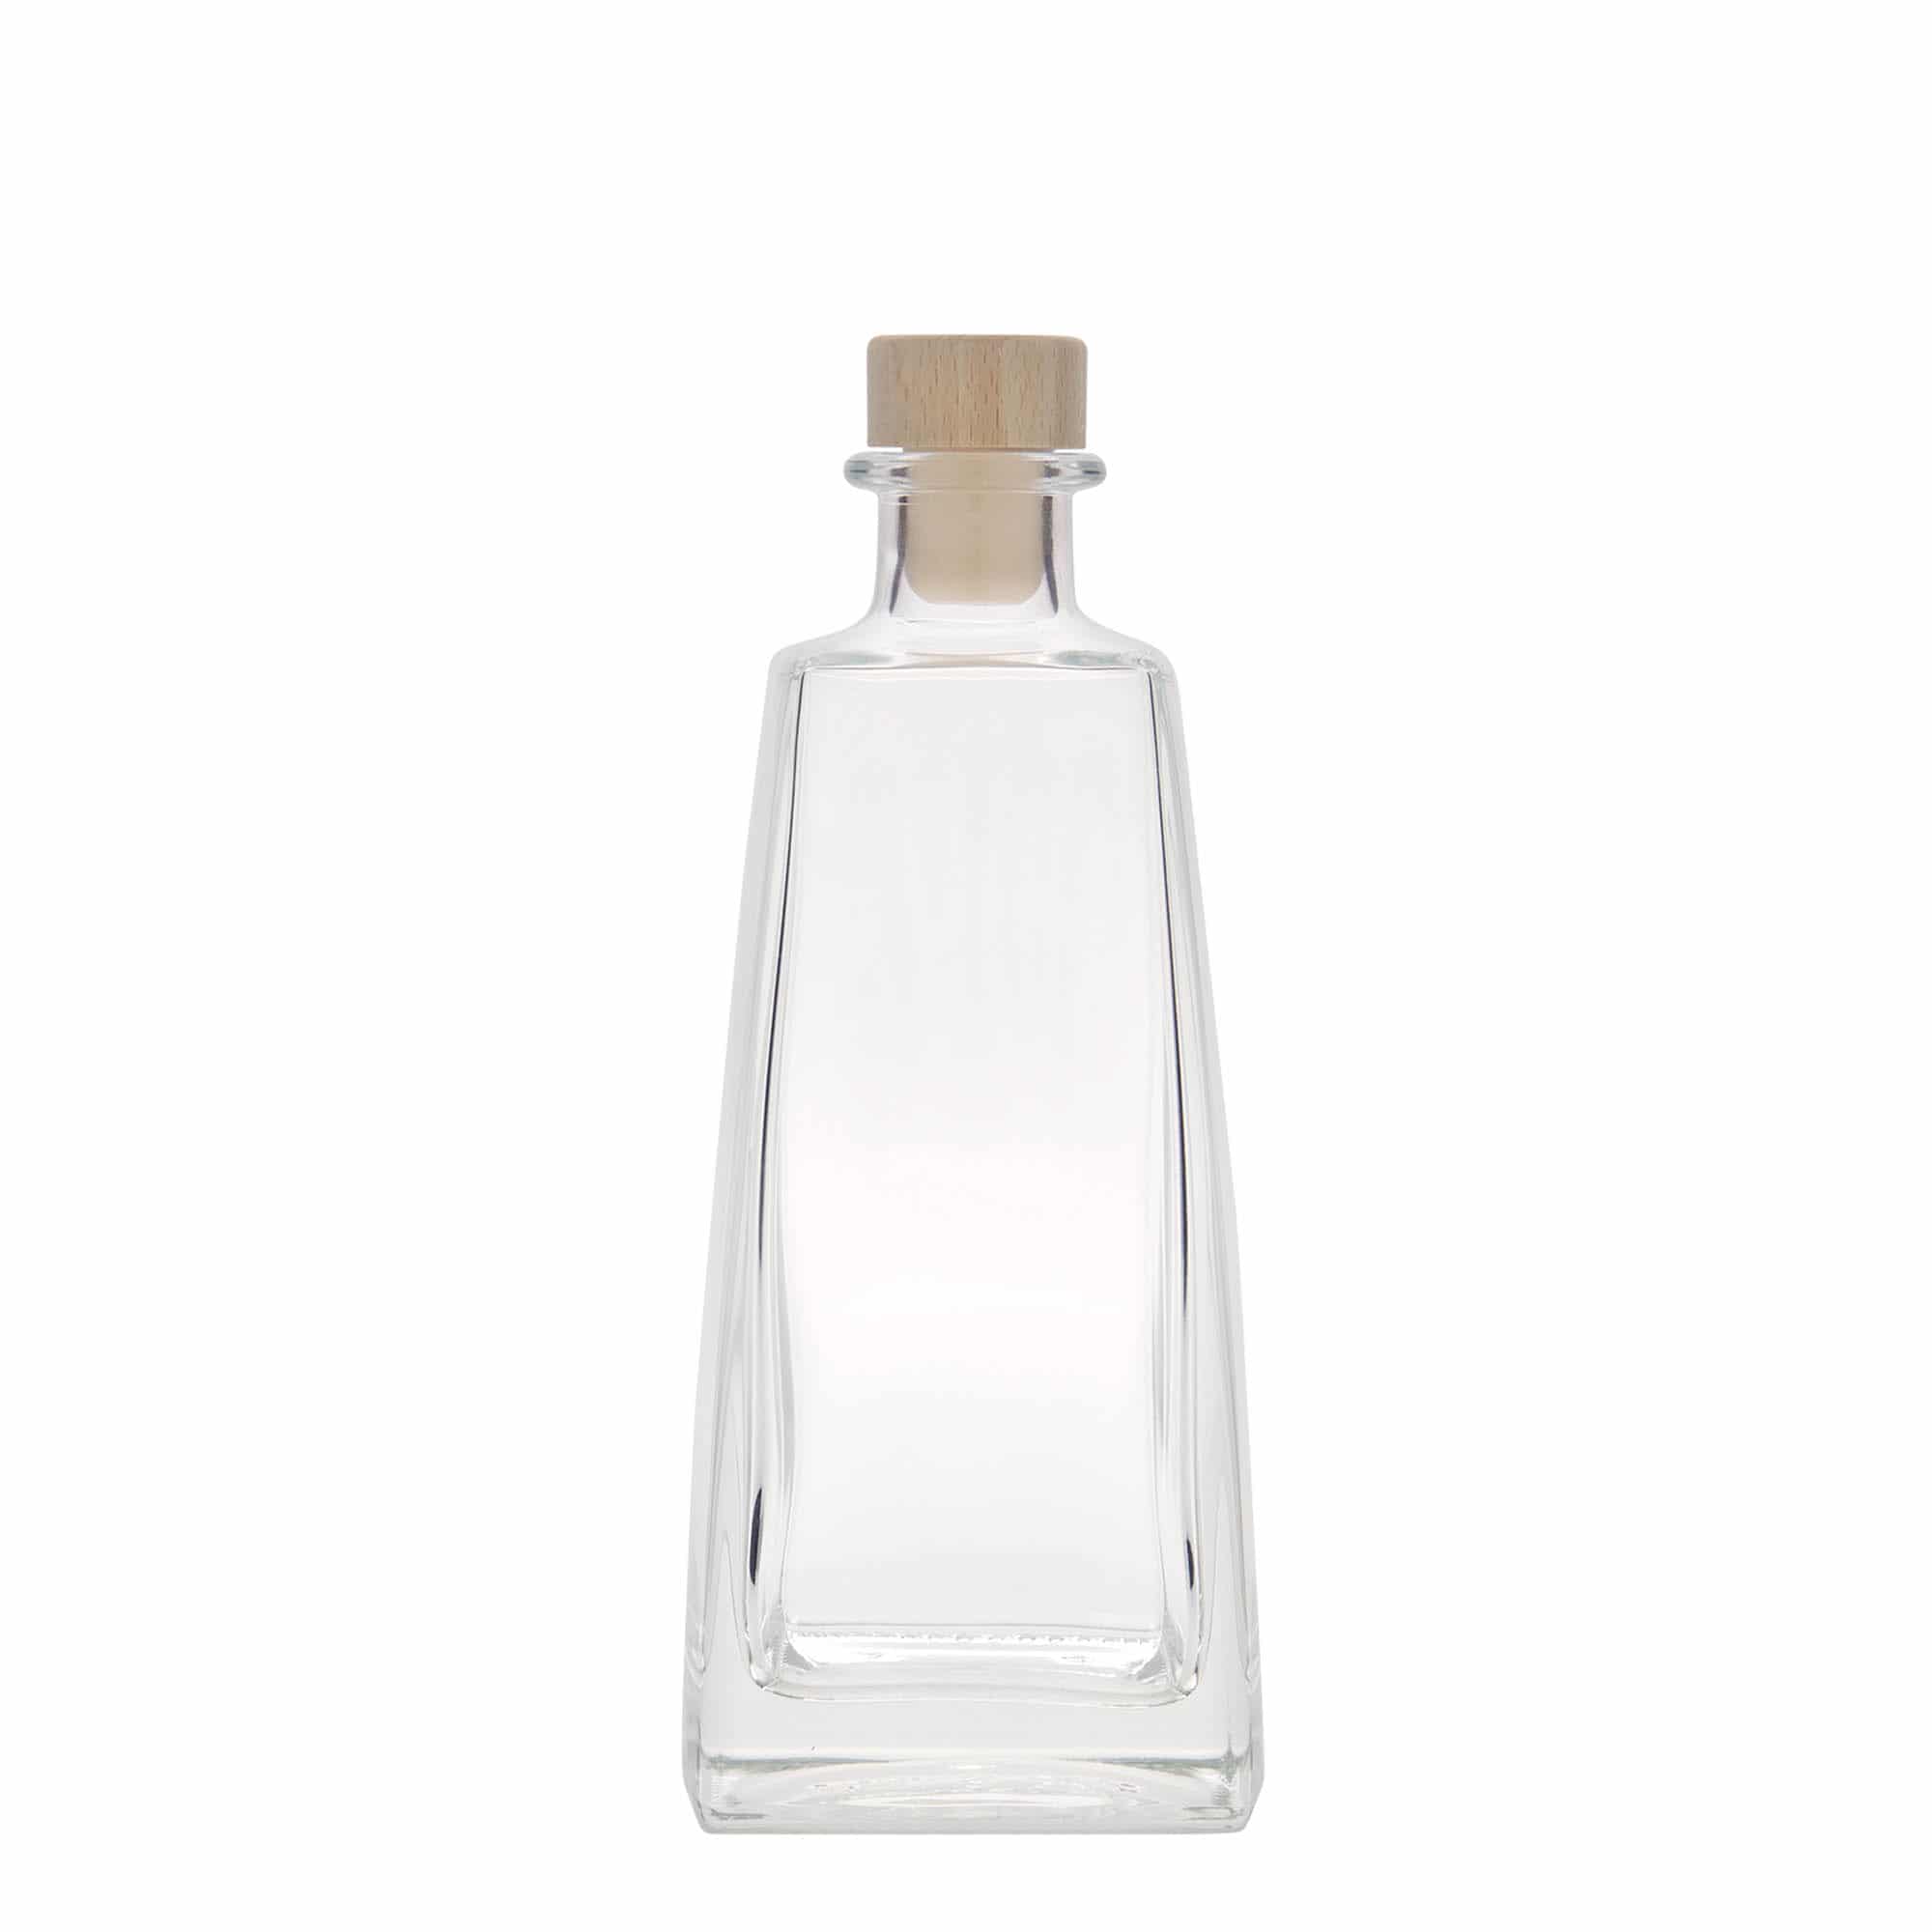 350 ml glass bottle 'Timmy', rectangular, closure: cork